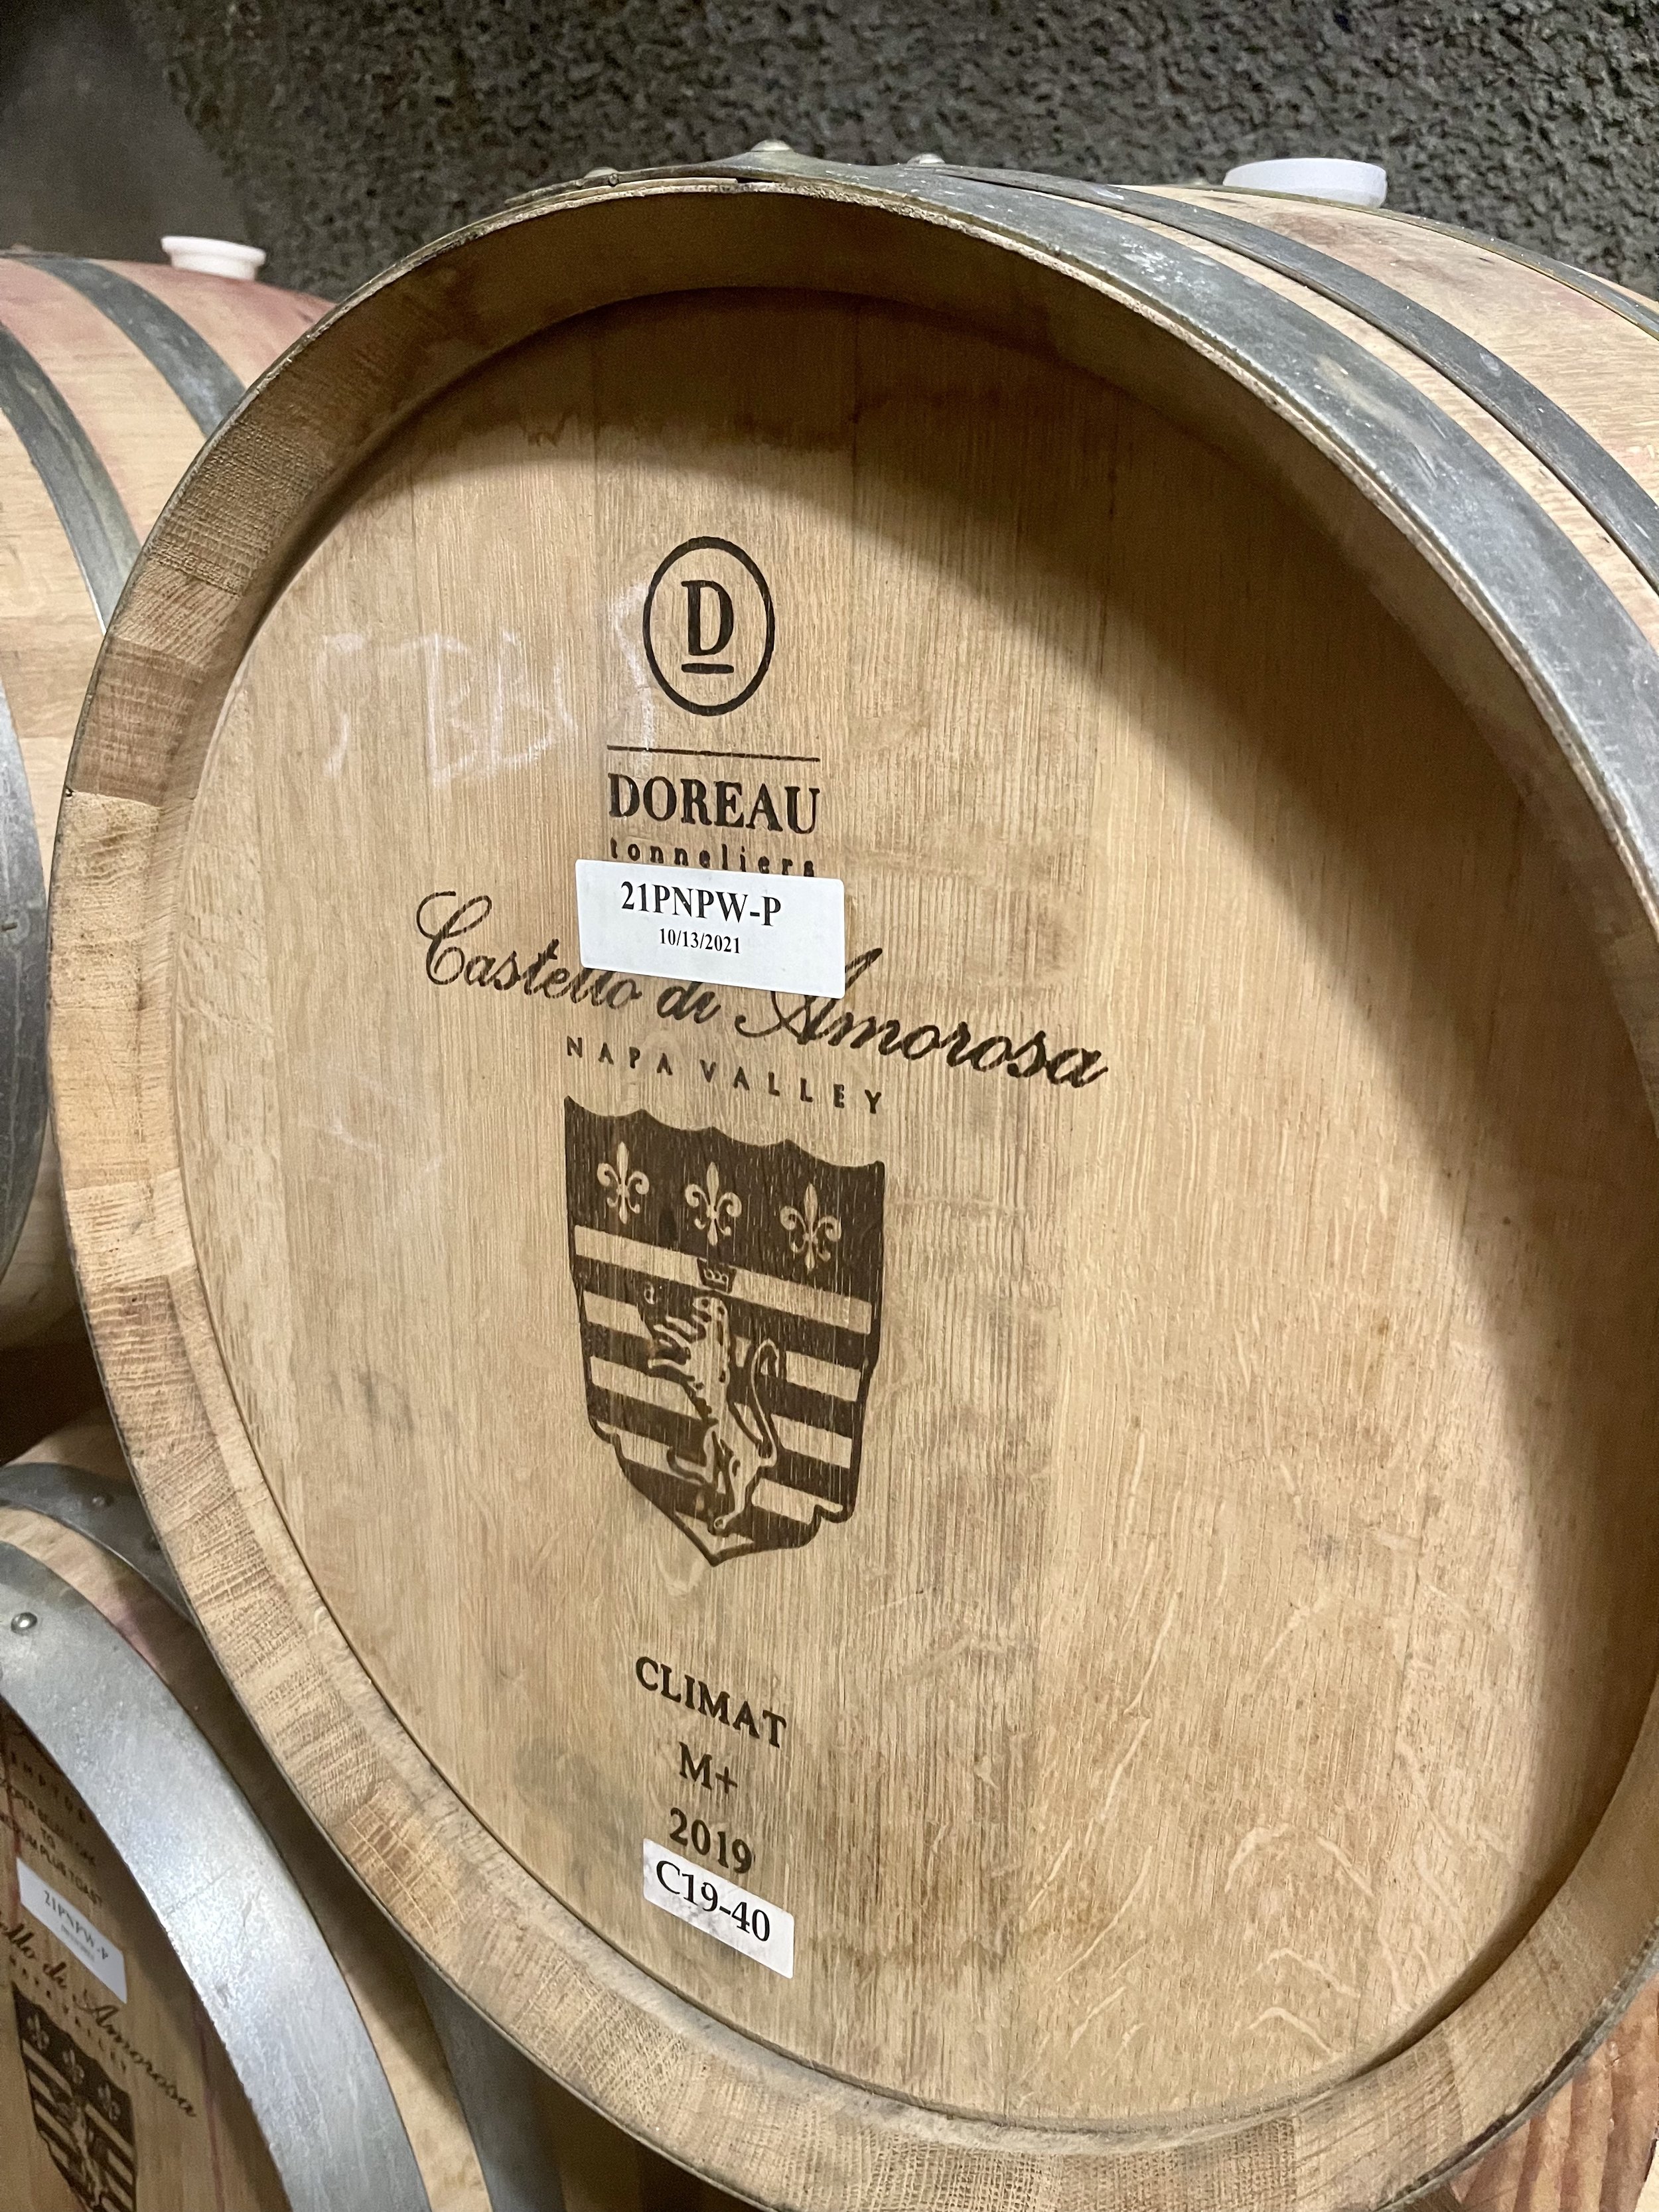 Castello di Amorosa reviews - one of the top napa winery